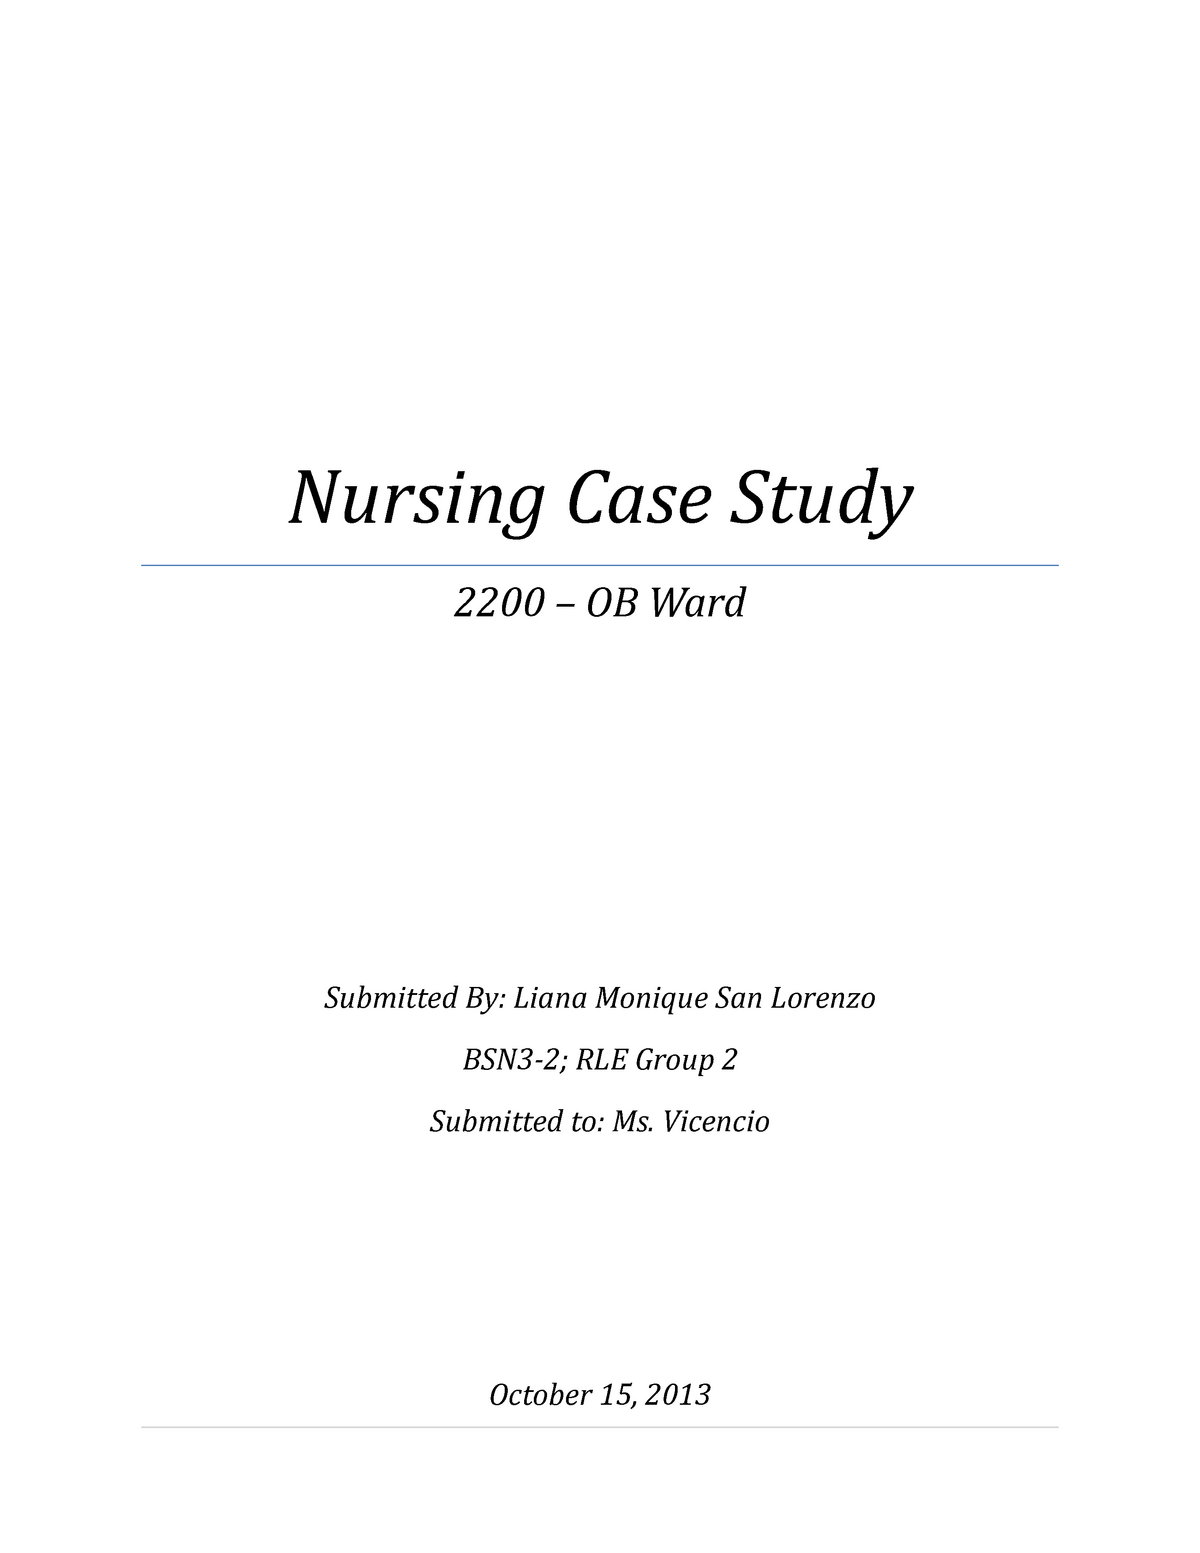 legal case study nursing